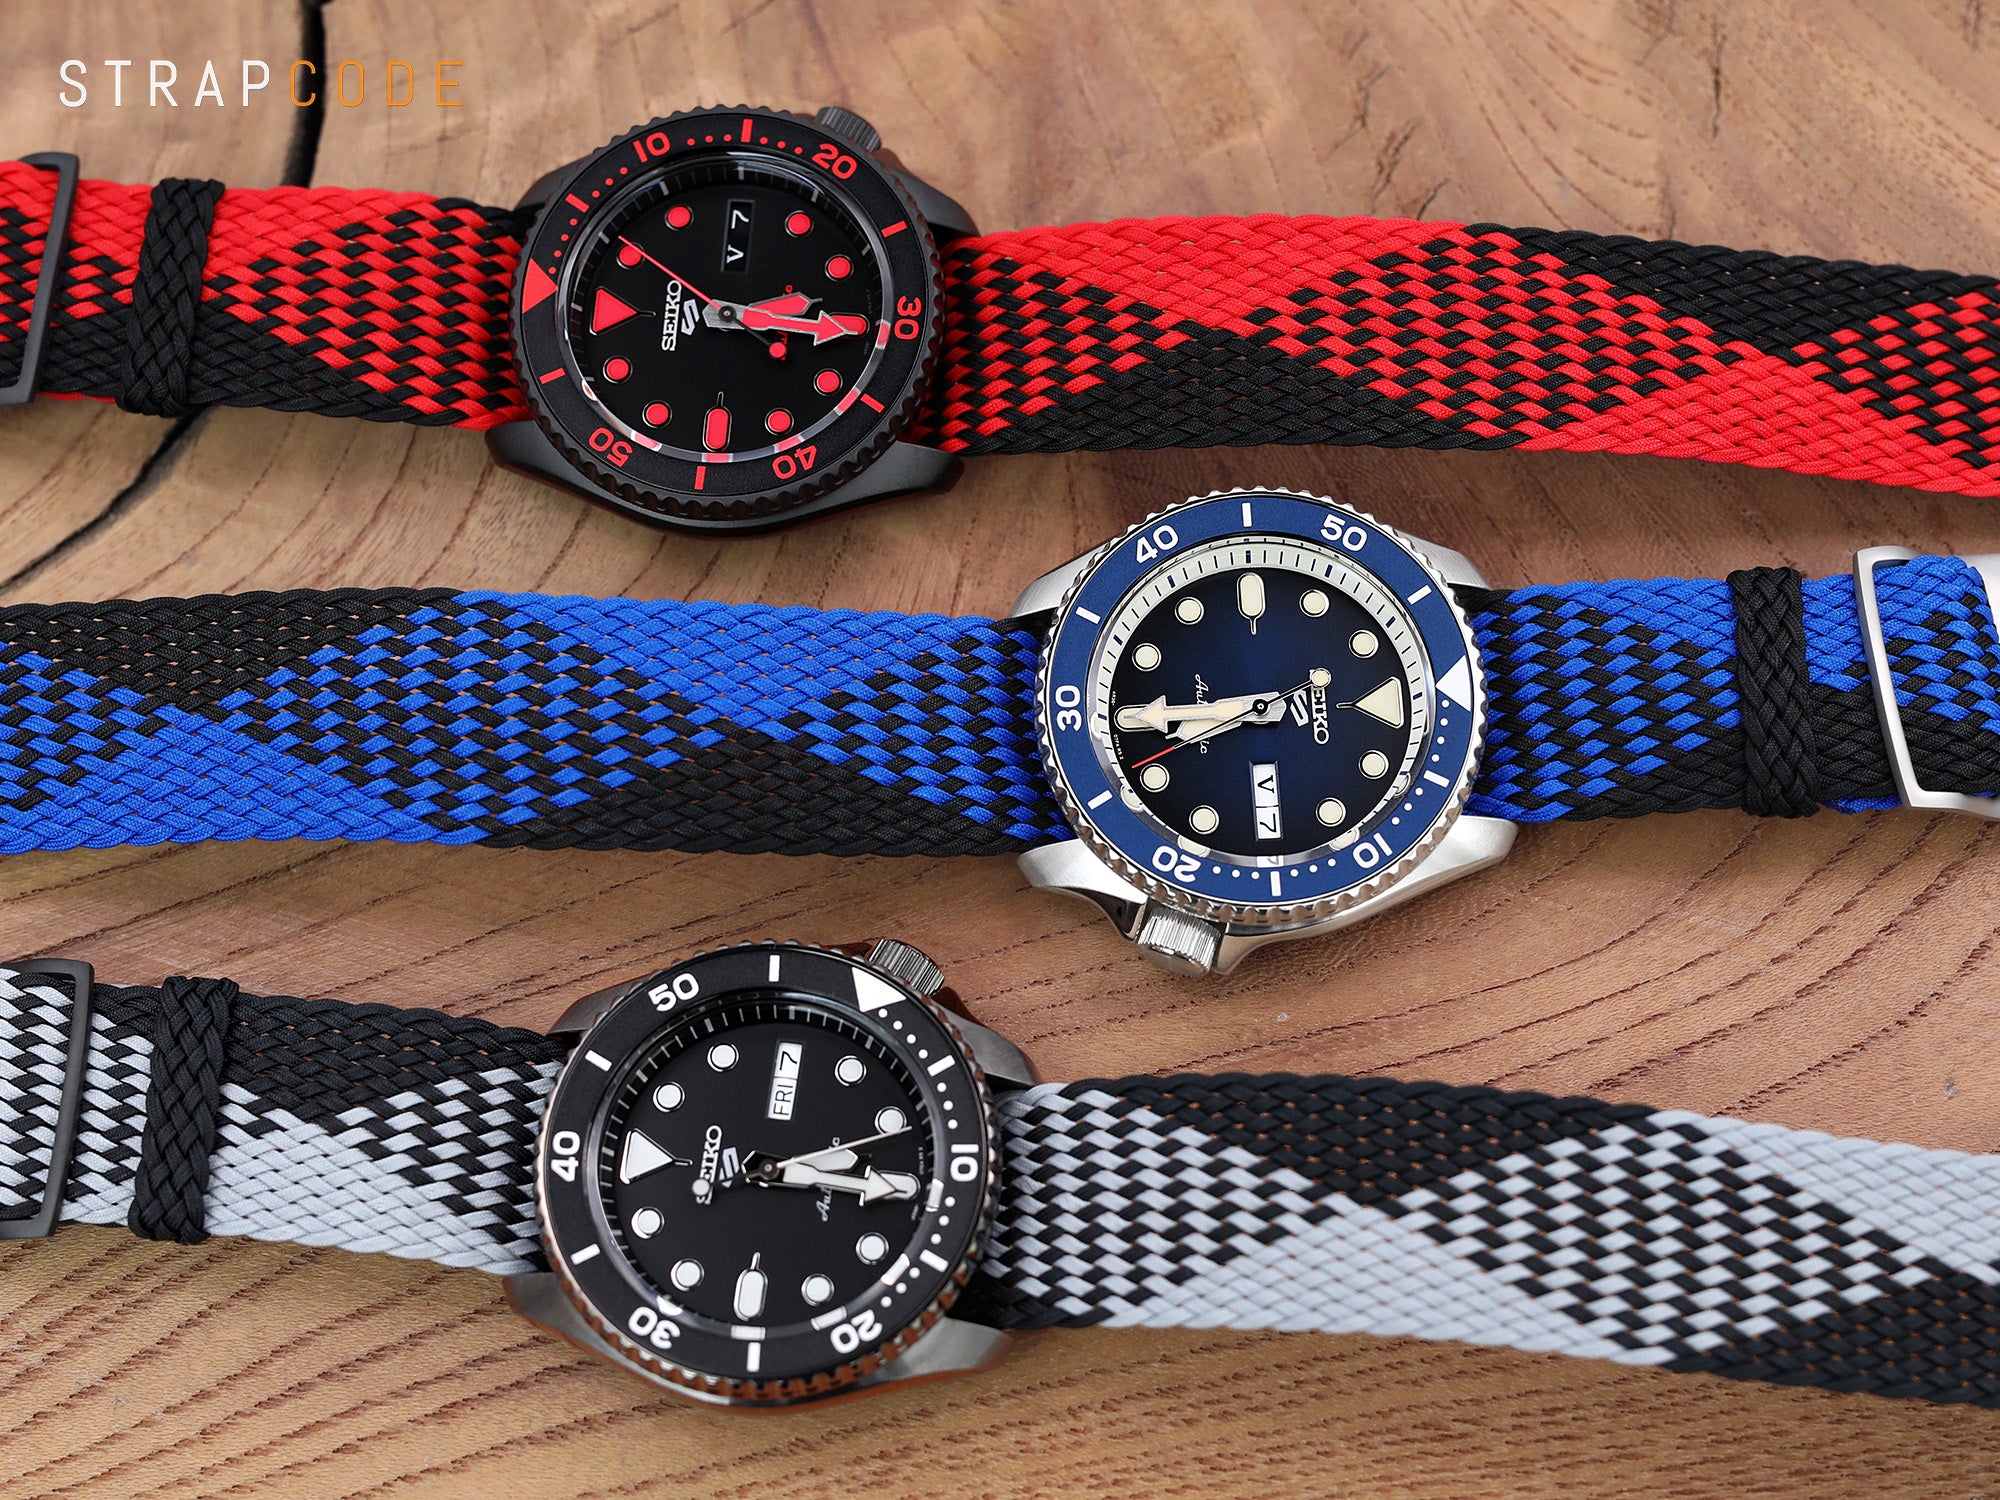 Three Seiko 5 Sports timepieces SRPD83K1 Black/Red; SRPD71K2/Blue and SRPD65K1/Black, showcase the versatility of Perlon watch straps